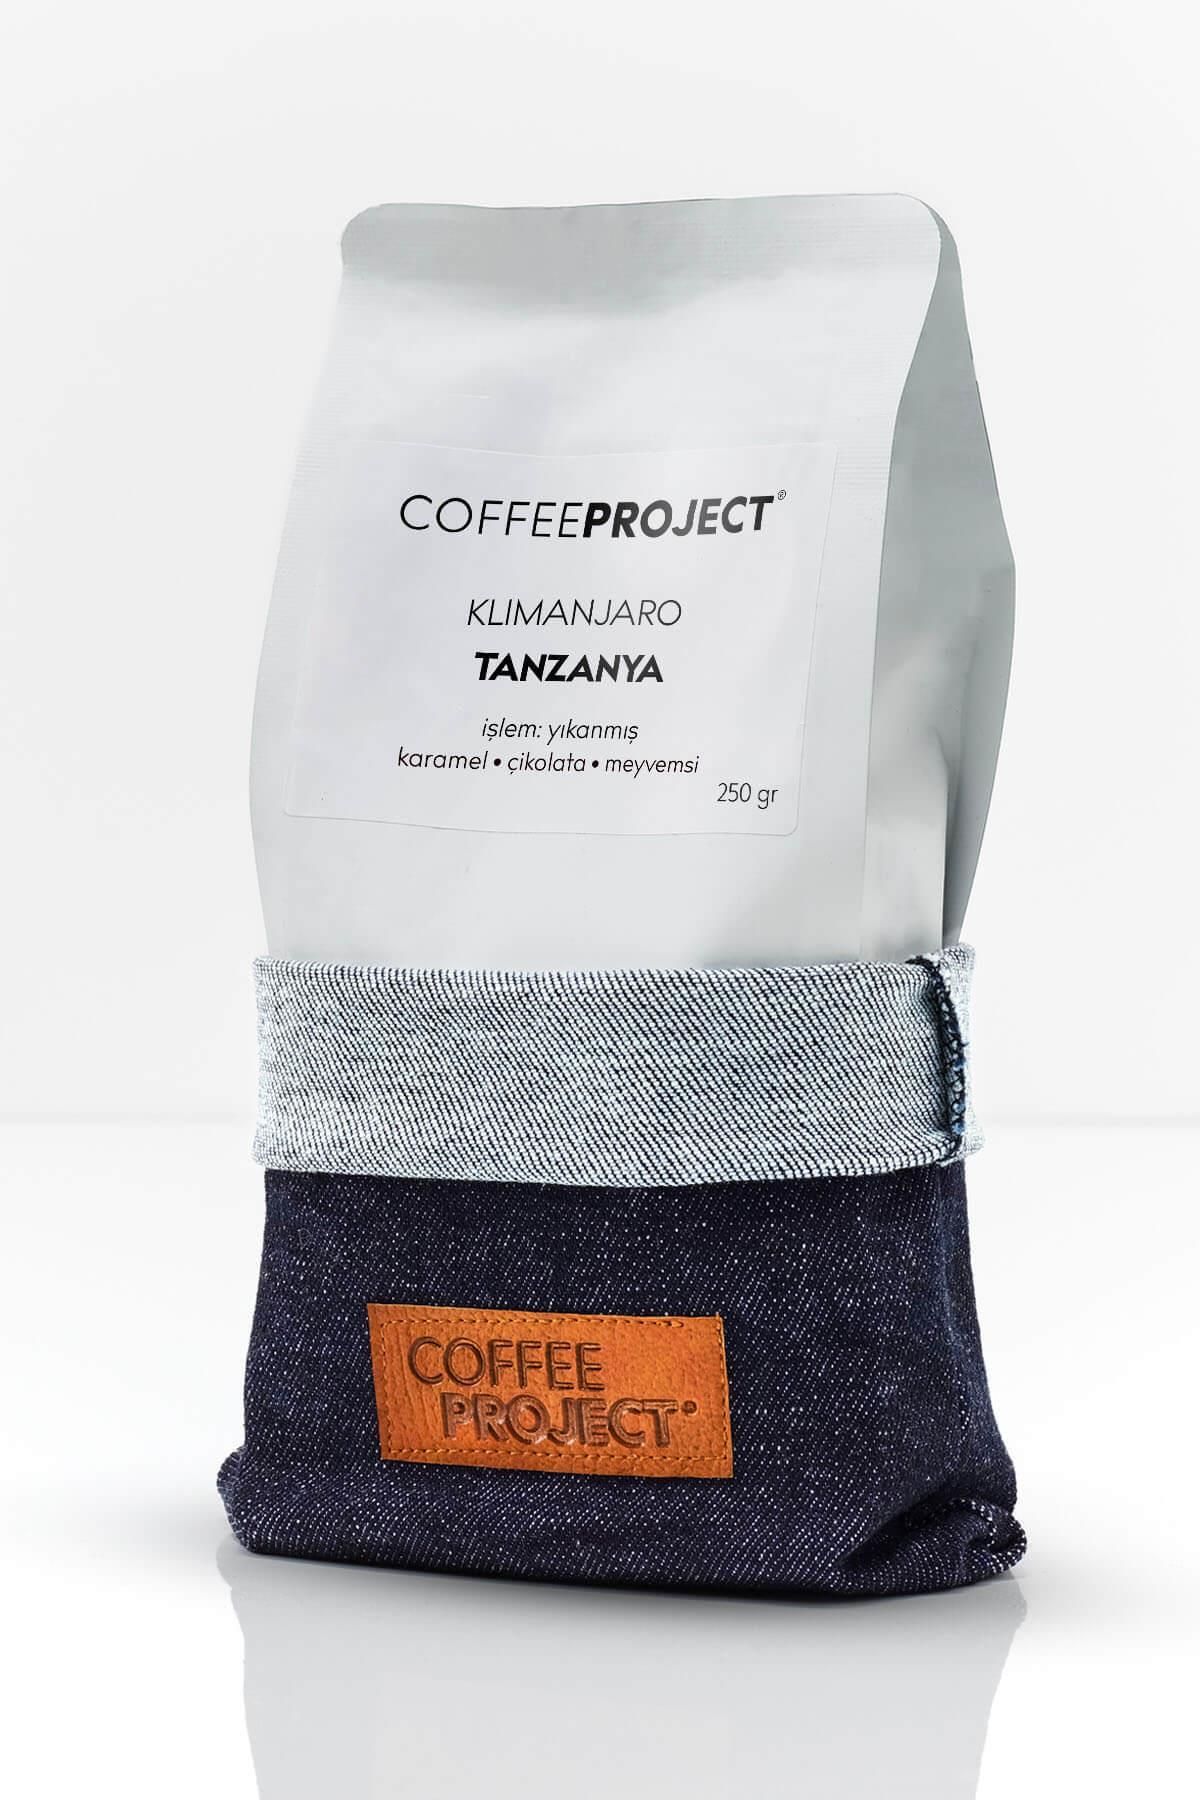 Coffee Project Tanzanya - Klimanjaro | Filtre Kahve 250 gr